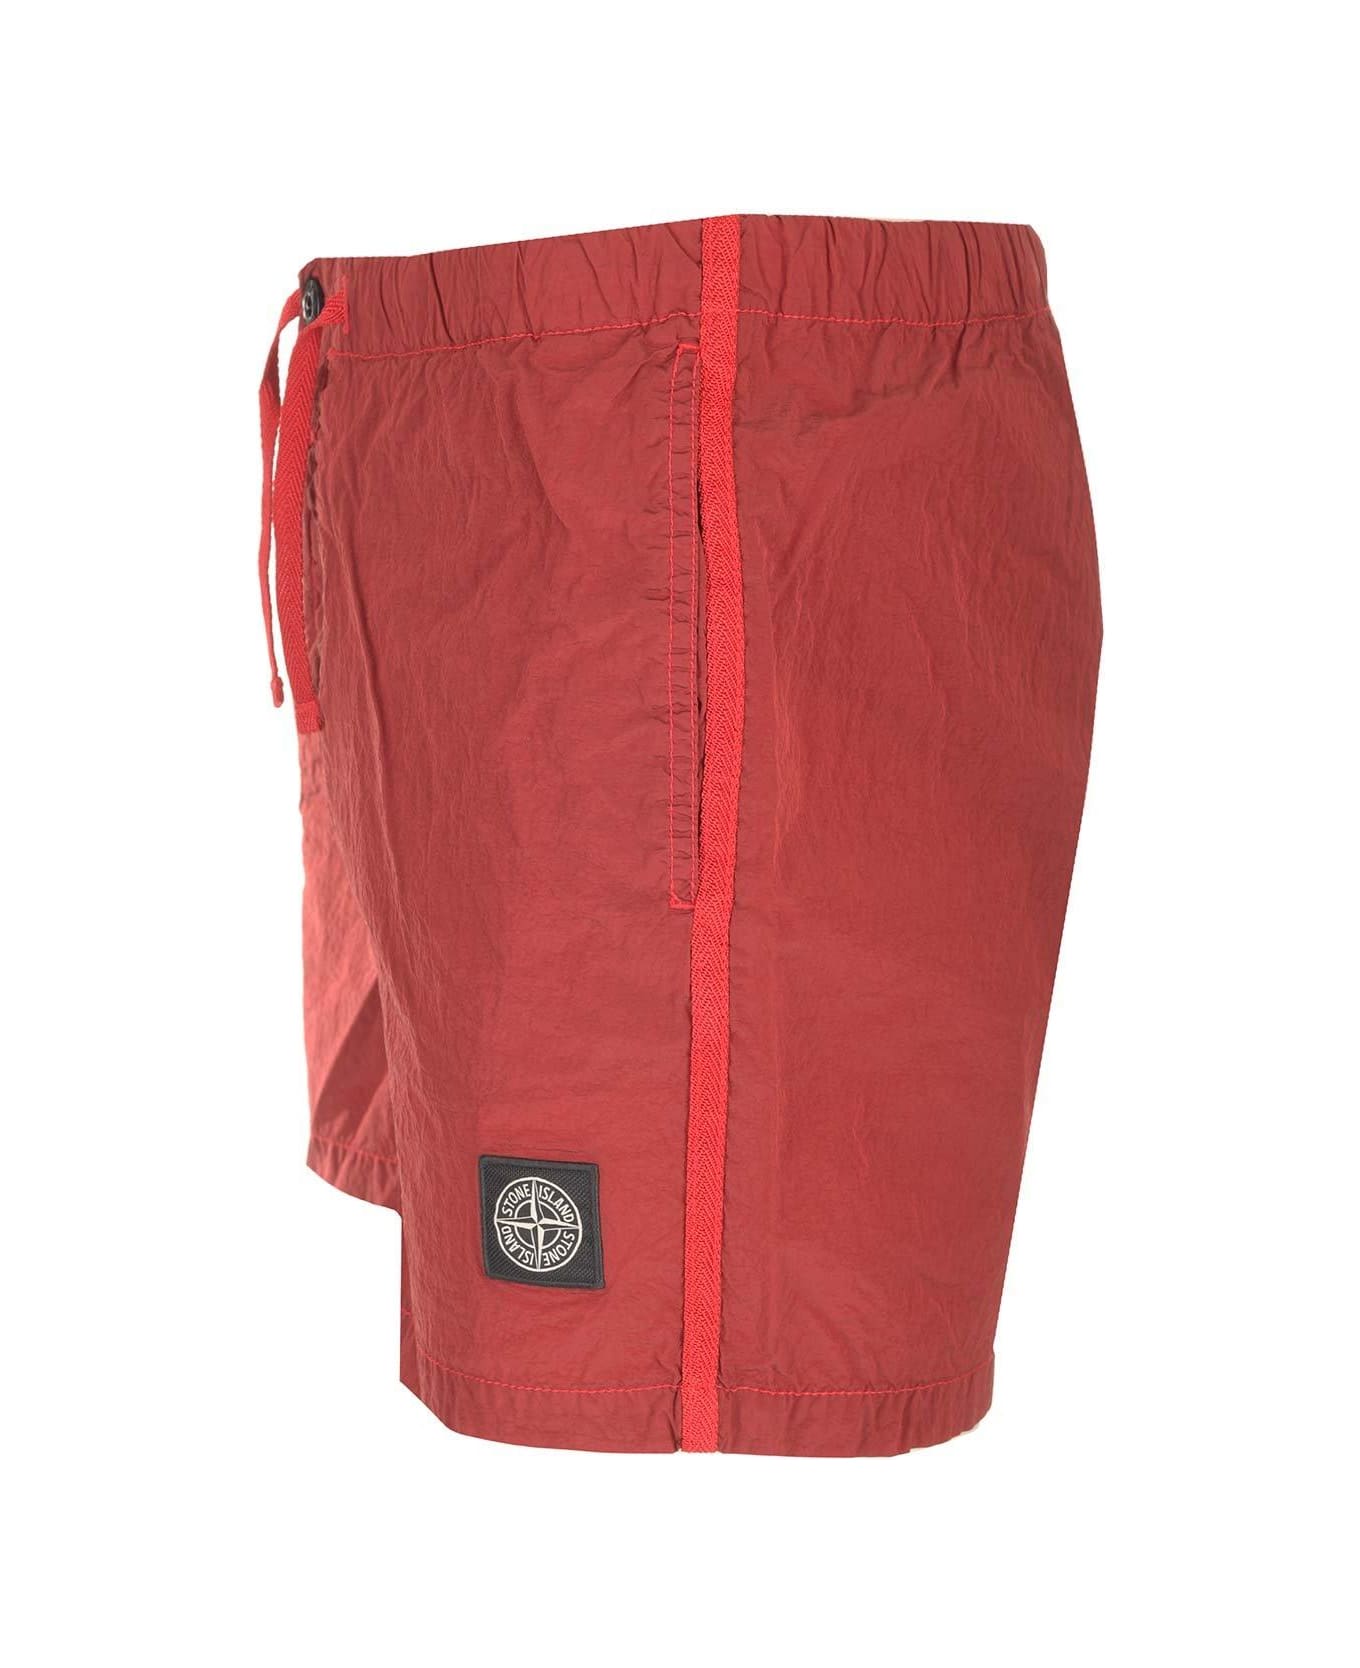 Stone Island Compass Patch Swim Shorts - Red ショートパンツ